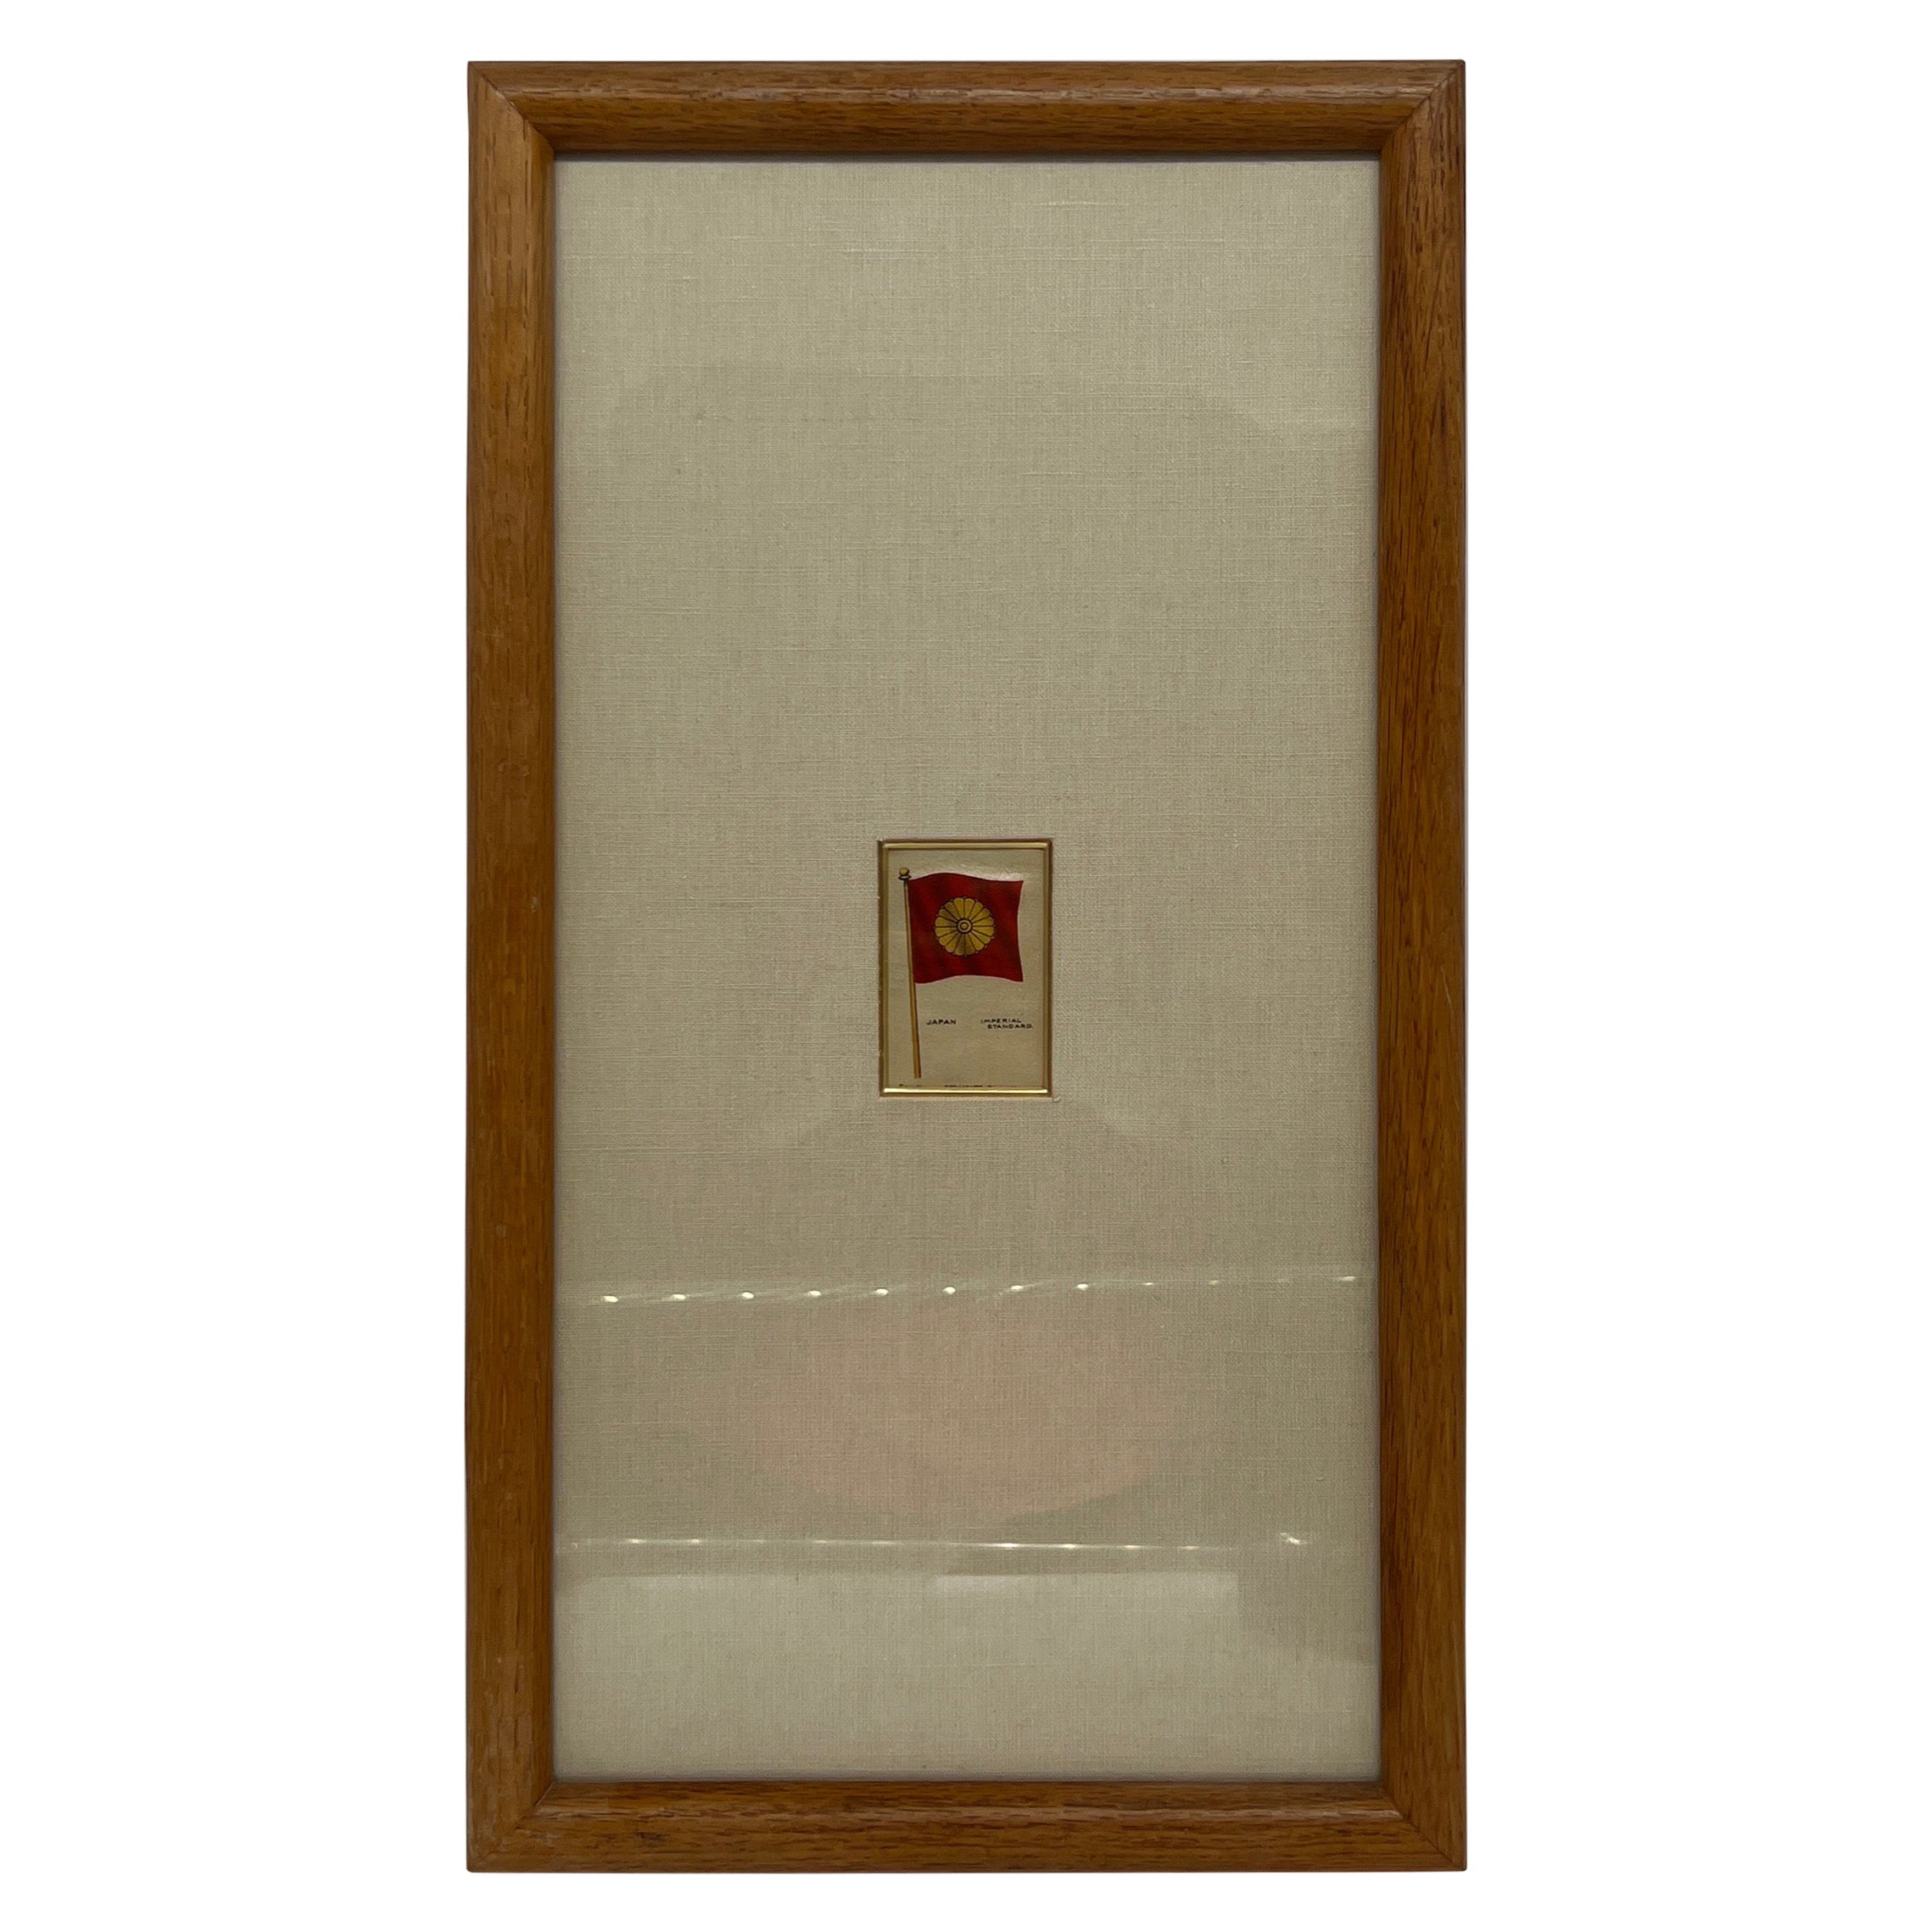 Sovereign Cigarettes "Imperial Standard" Japan Flag on Silk Framed Art